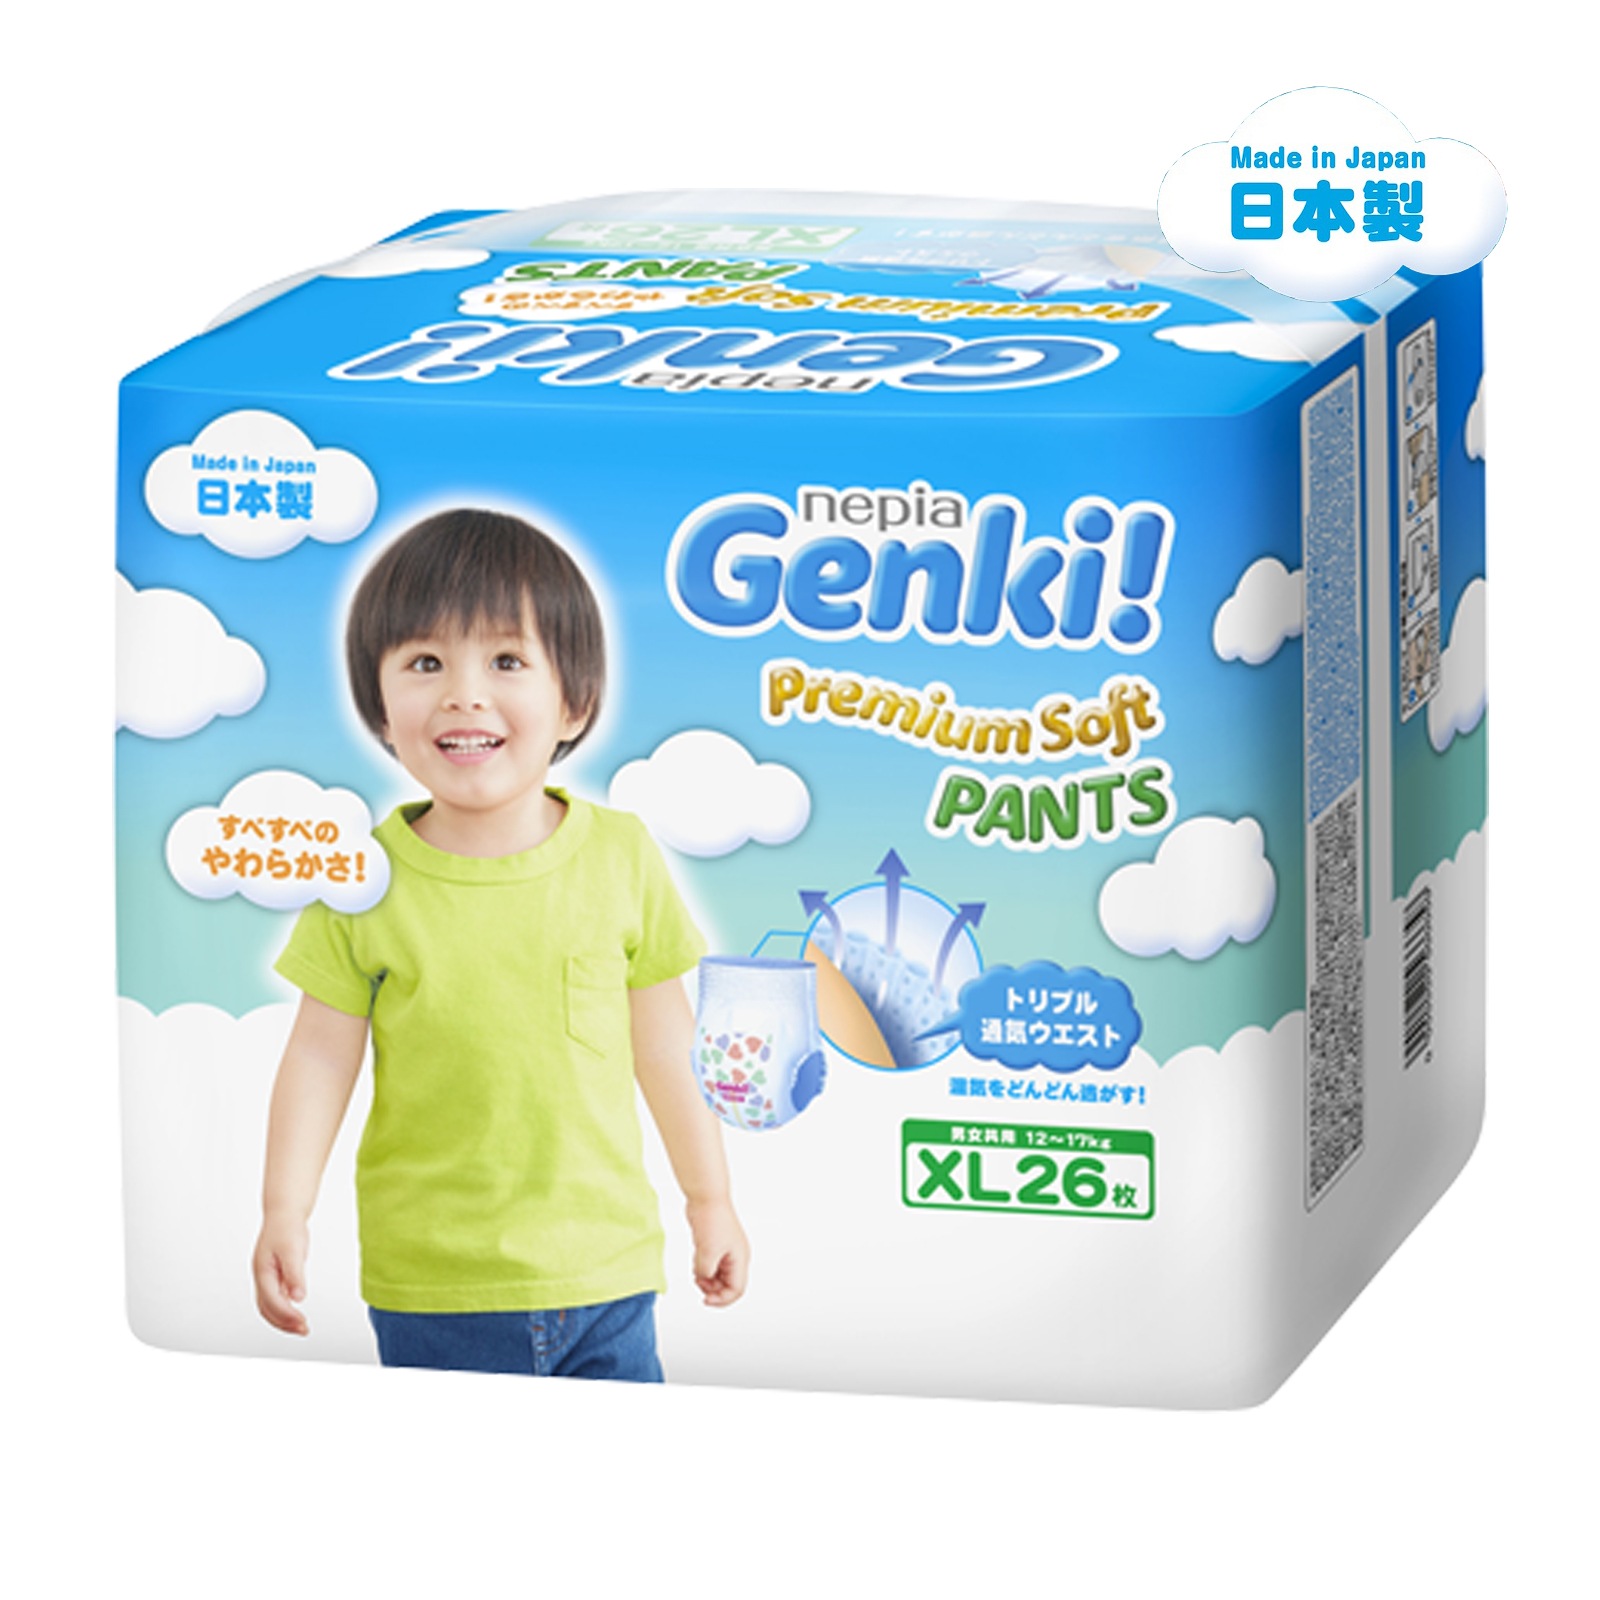 Genki Diapers Premium Soft Pants XL Carton Deal (XL26 x 6)